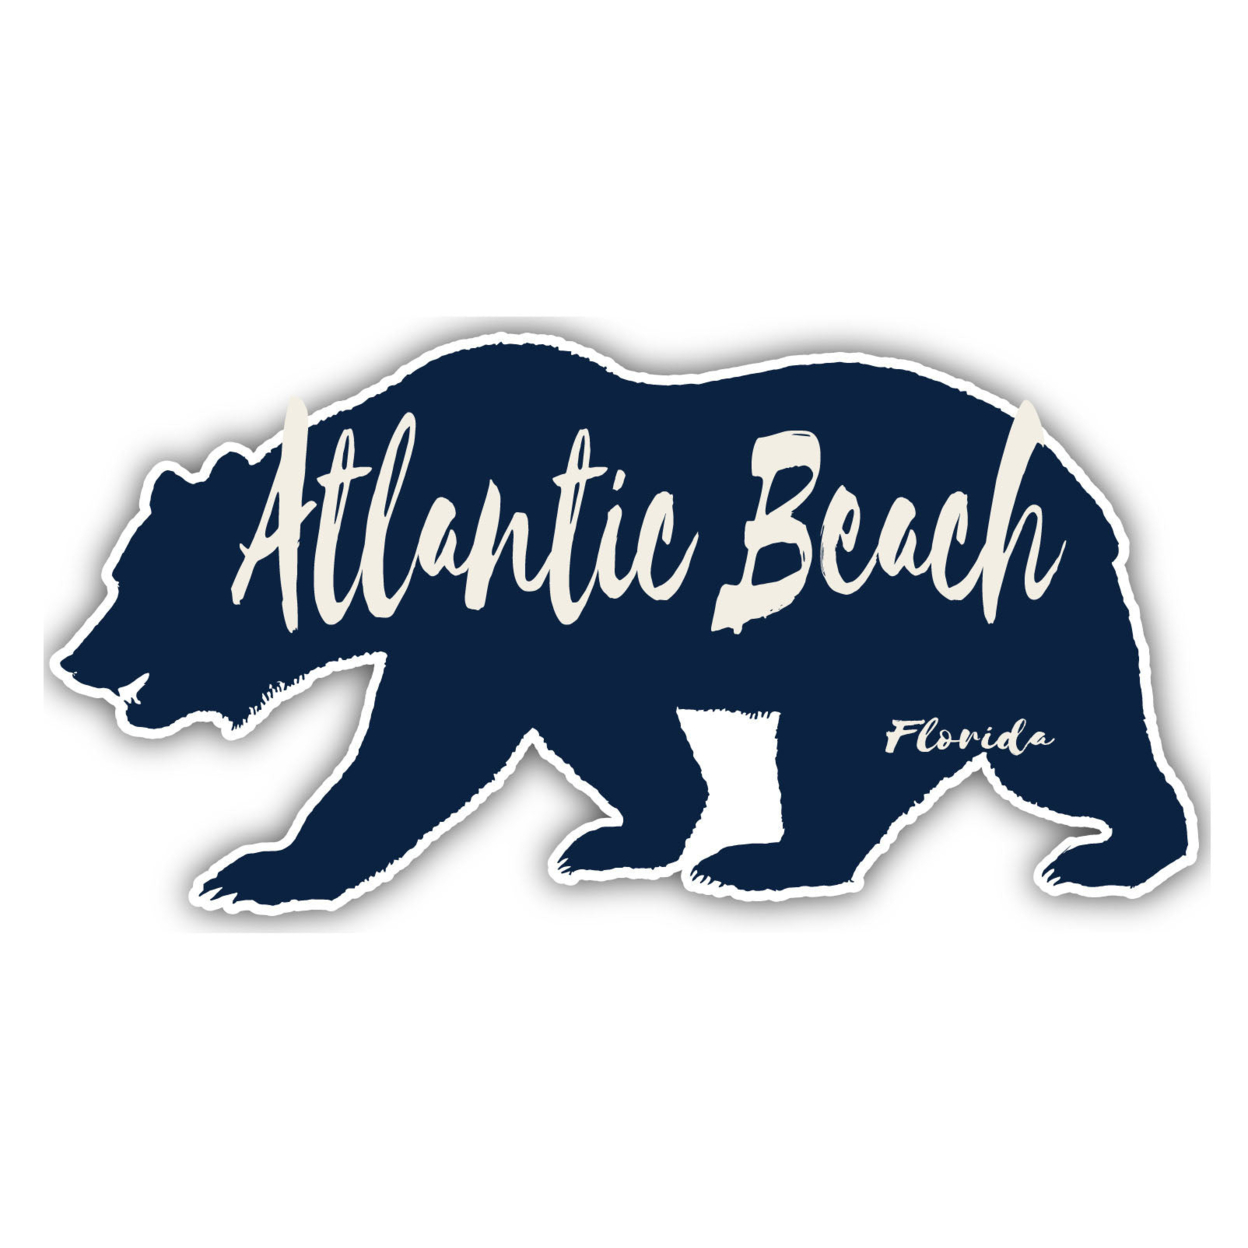 Atlantic Beach Florida Souvenir Decorative Stickers (Choose Theme And Size) - 4-Pack, 12-Inch, Bear